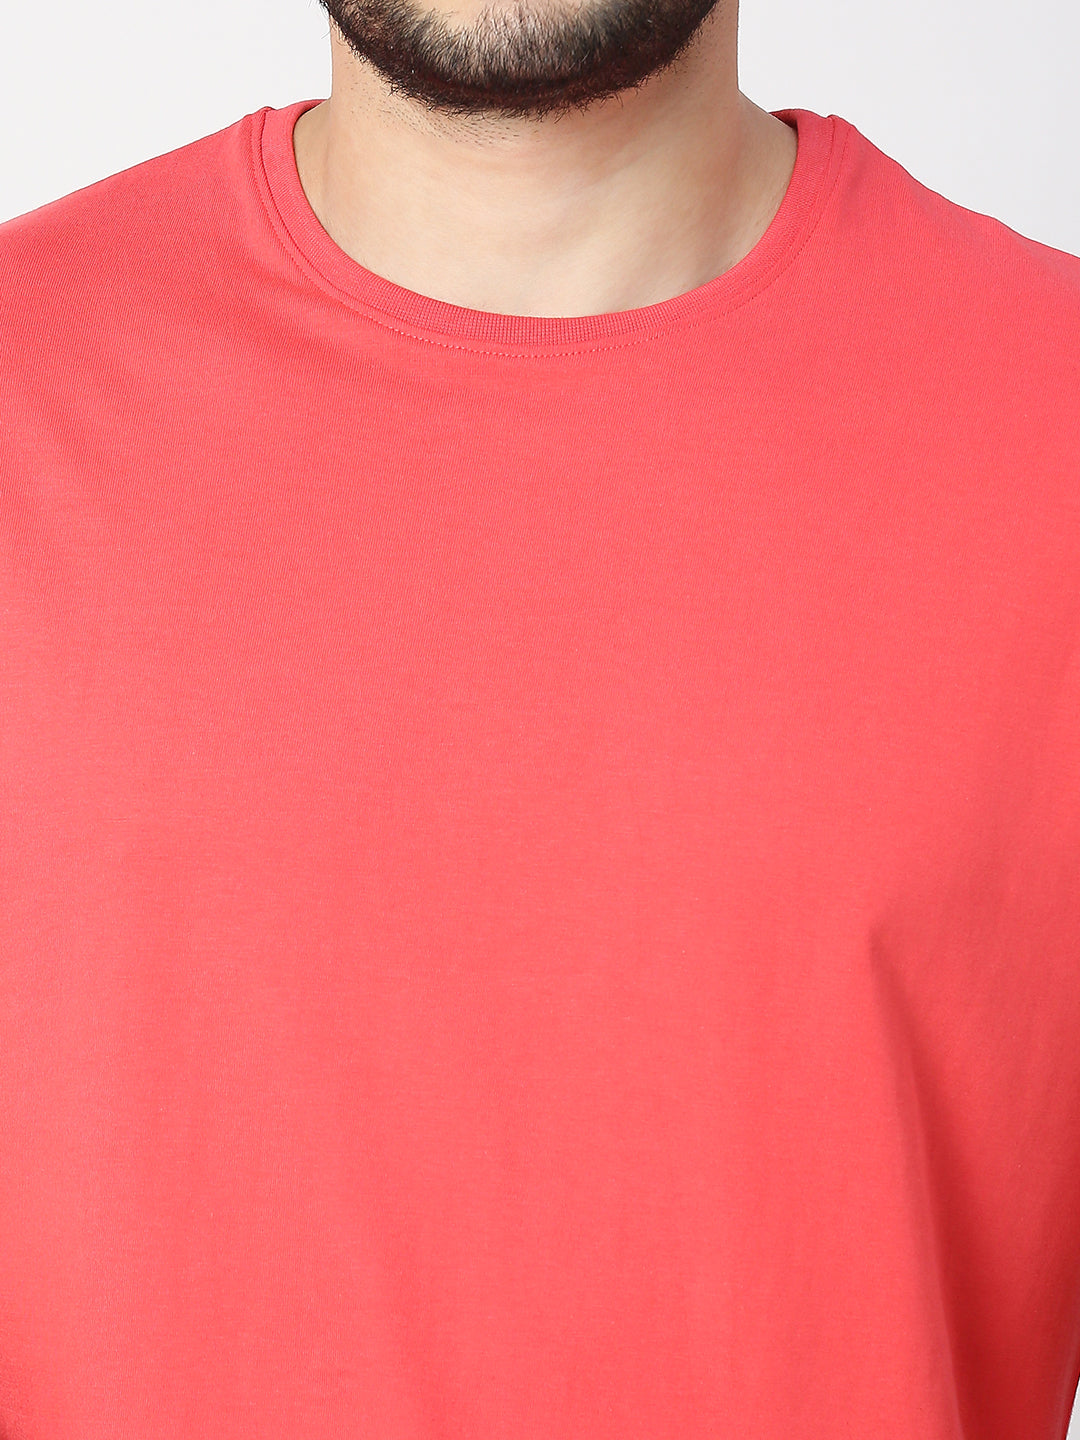 Buy Blamblack Solid Cherry Red Half Sleeved T-shirt